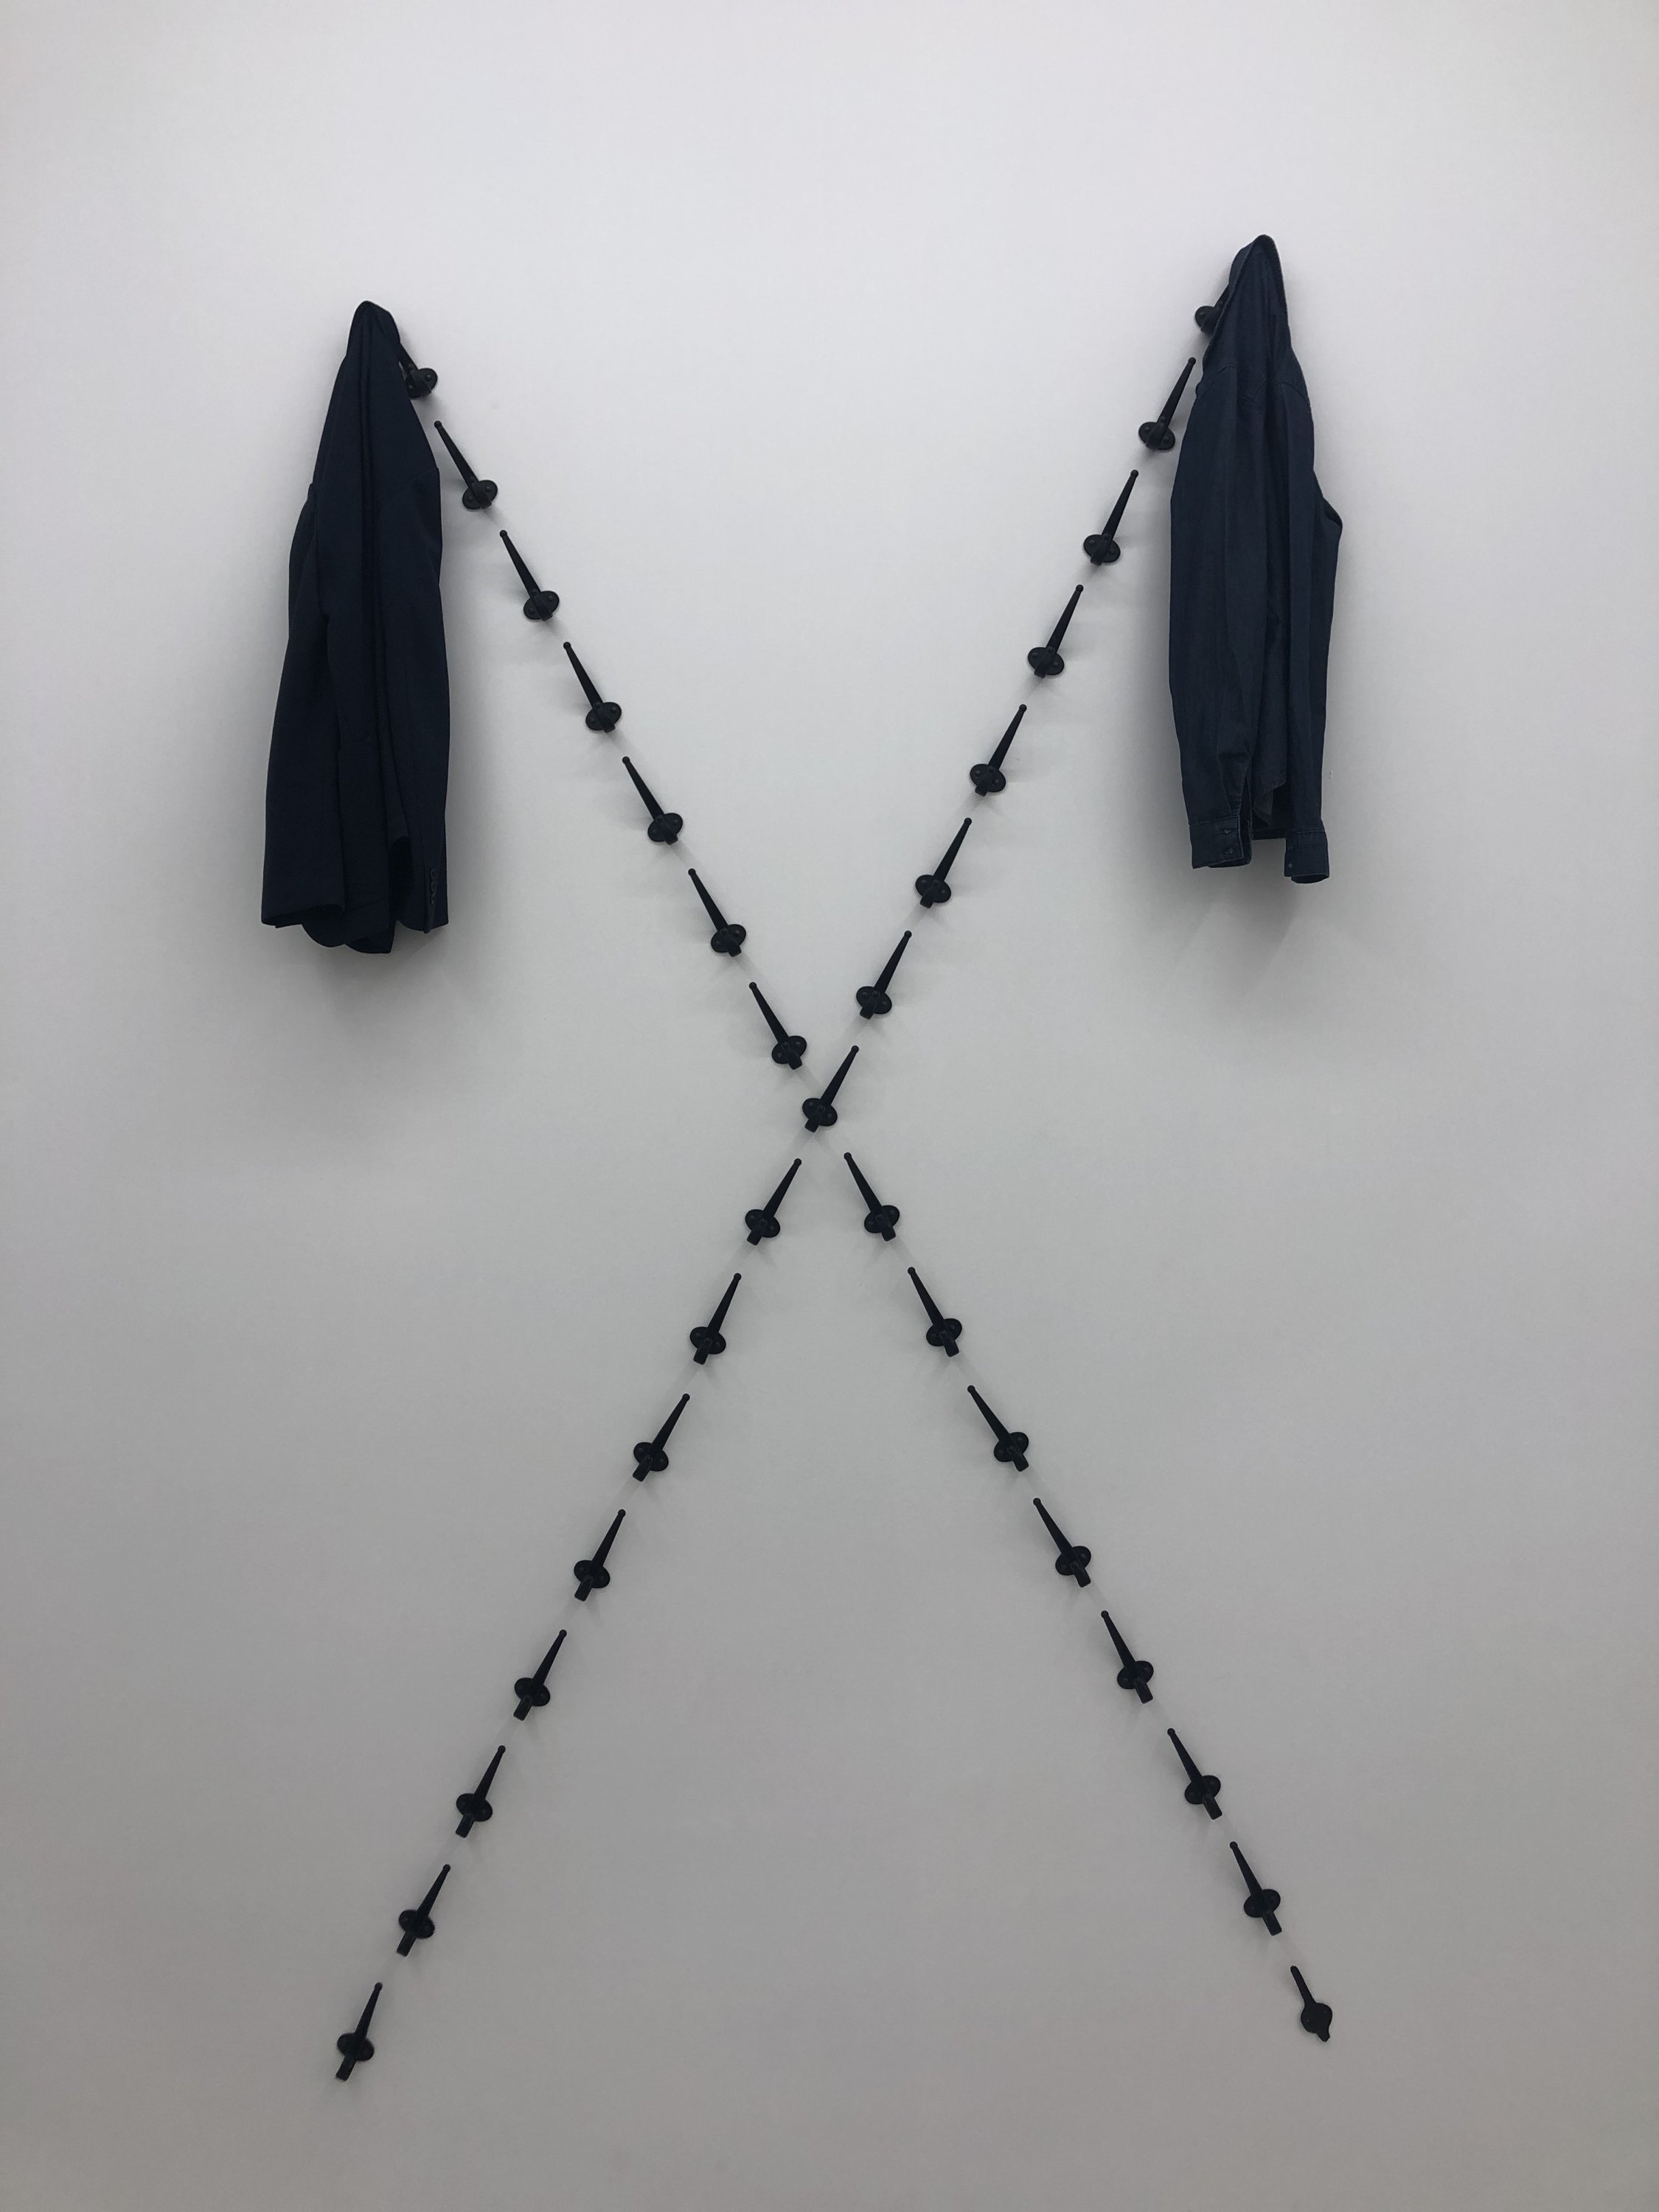 An installation comprising of two coats and coat hangers forming an “X” shape by Şakir Gökçebağ in 'Redimeyd' at Ferda Art Platform in Istanbul, Turkey. (Courtesy of Şakir Gökçebağ)